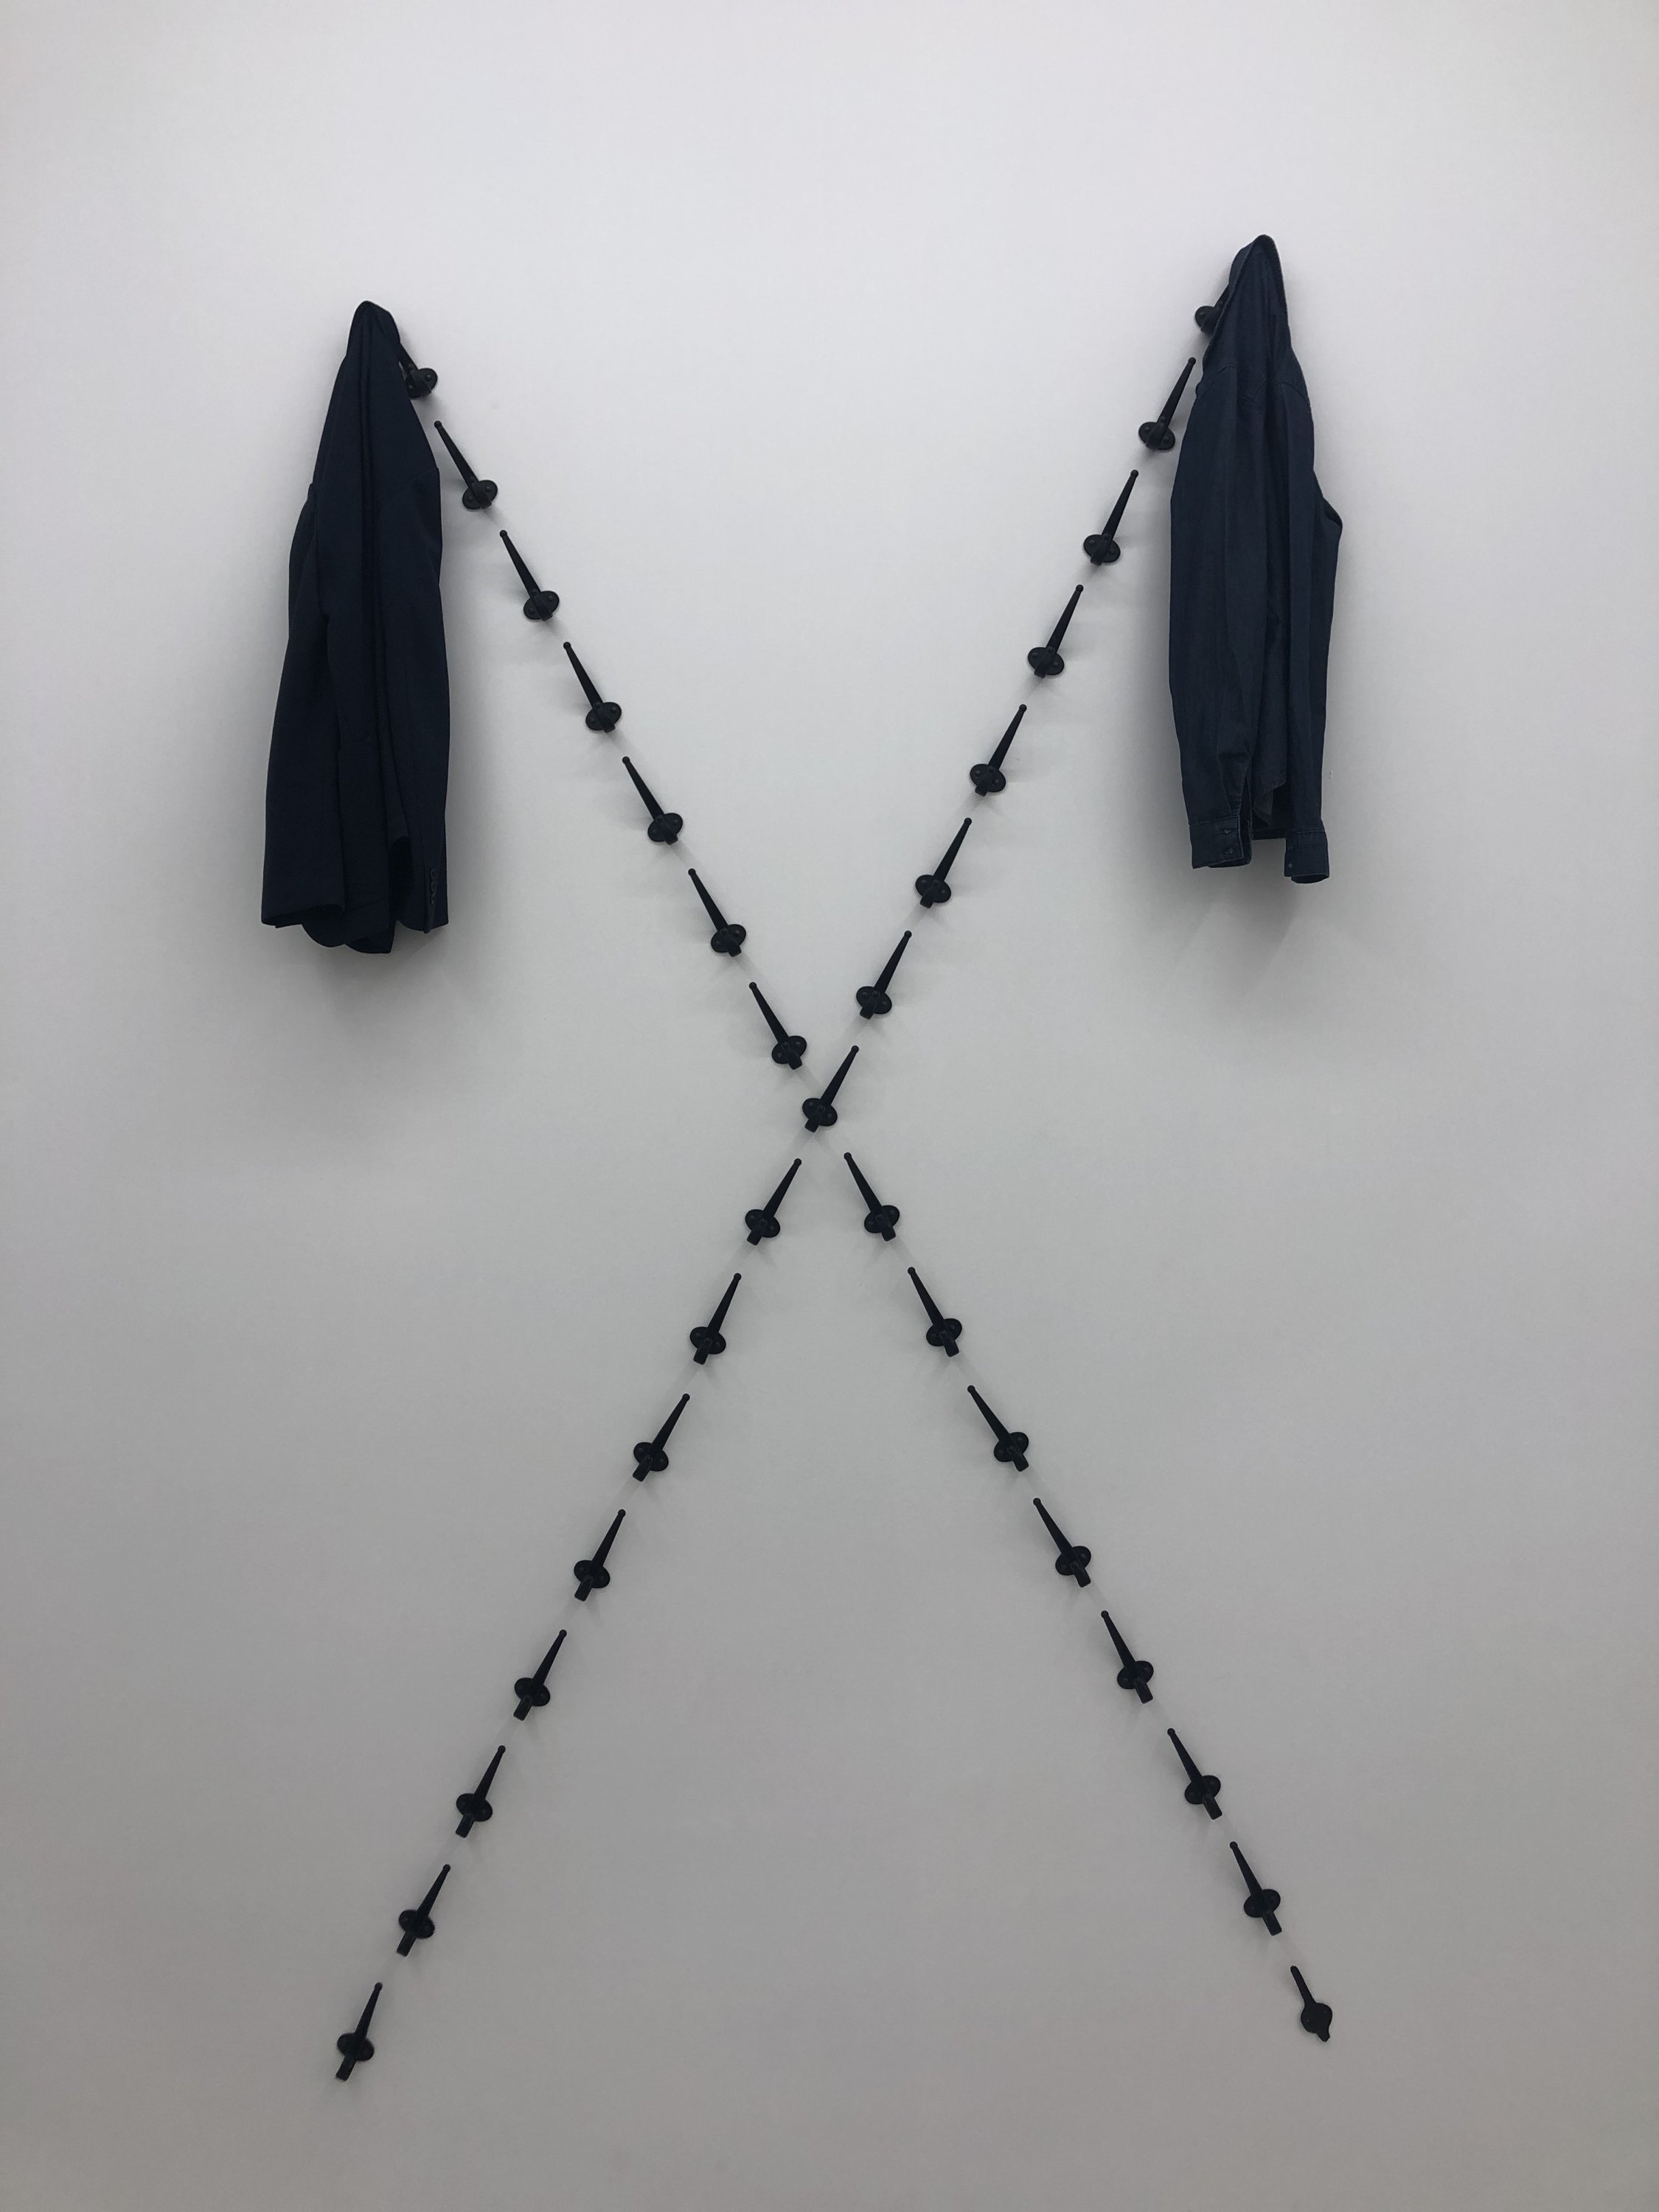 An installation comprising of two coats and coat hangers forming an “X” shape by Şakir Gökçebağ in 'Redimeyd' at Ferda Art Platform in Istanbul, Turkey. (Courtesy of Şakir Gökçebağ)